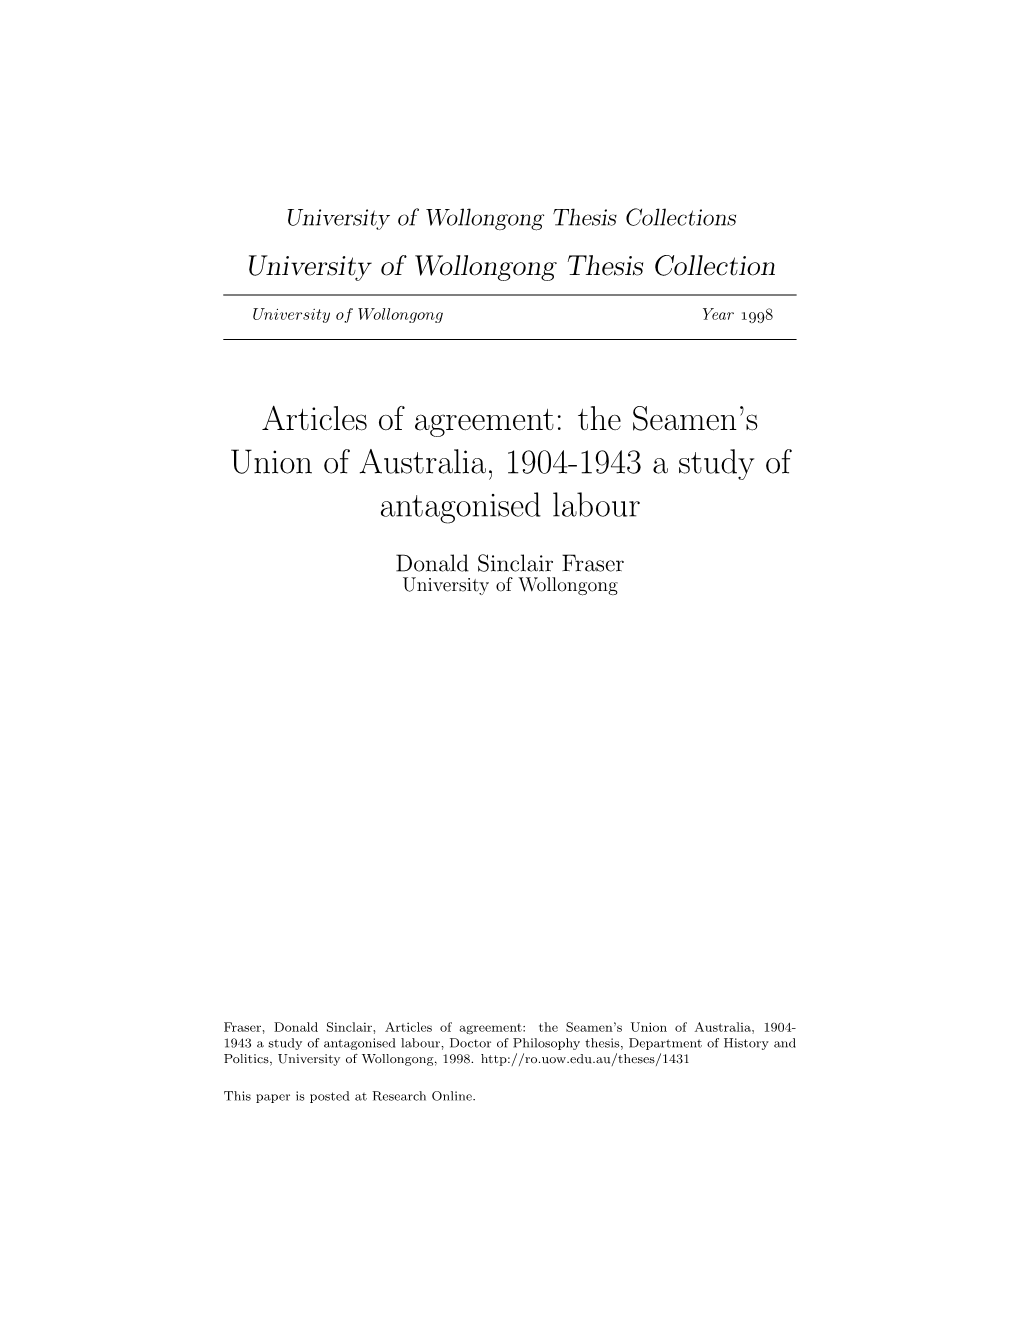 The Seamen's Union of Australia, 1904-1943 a Study of Antagonised Labour